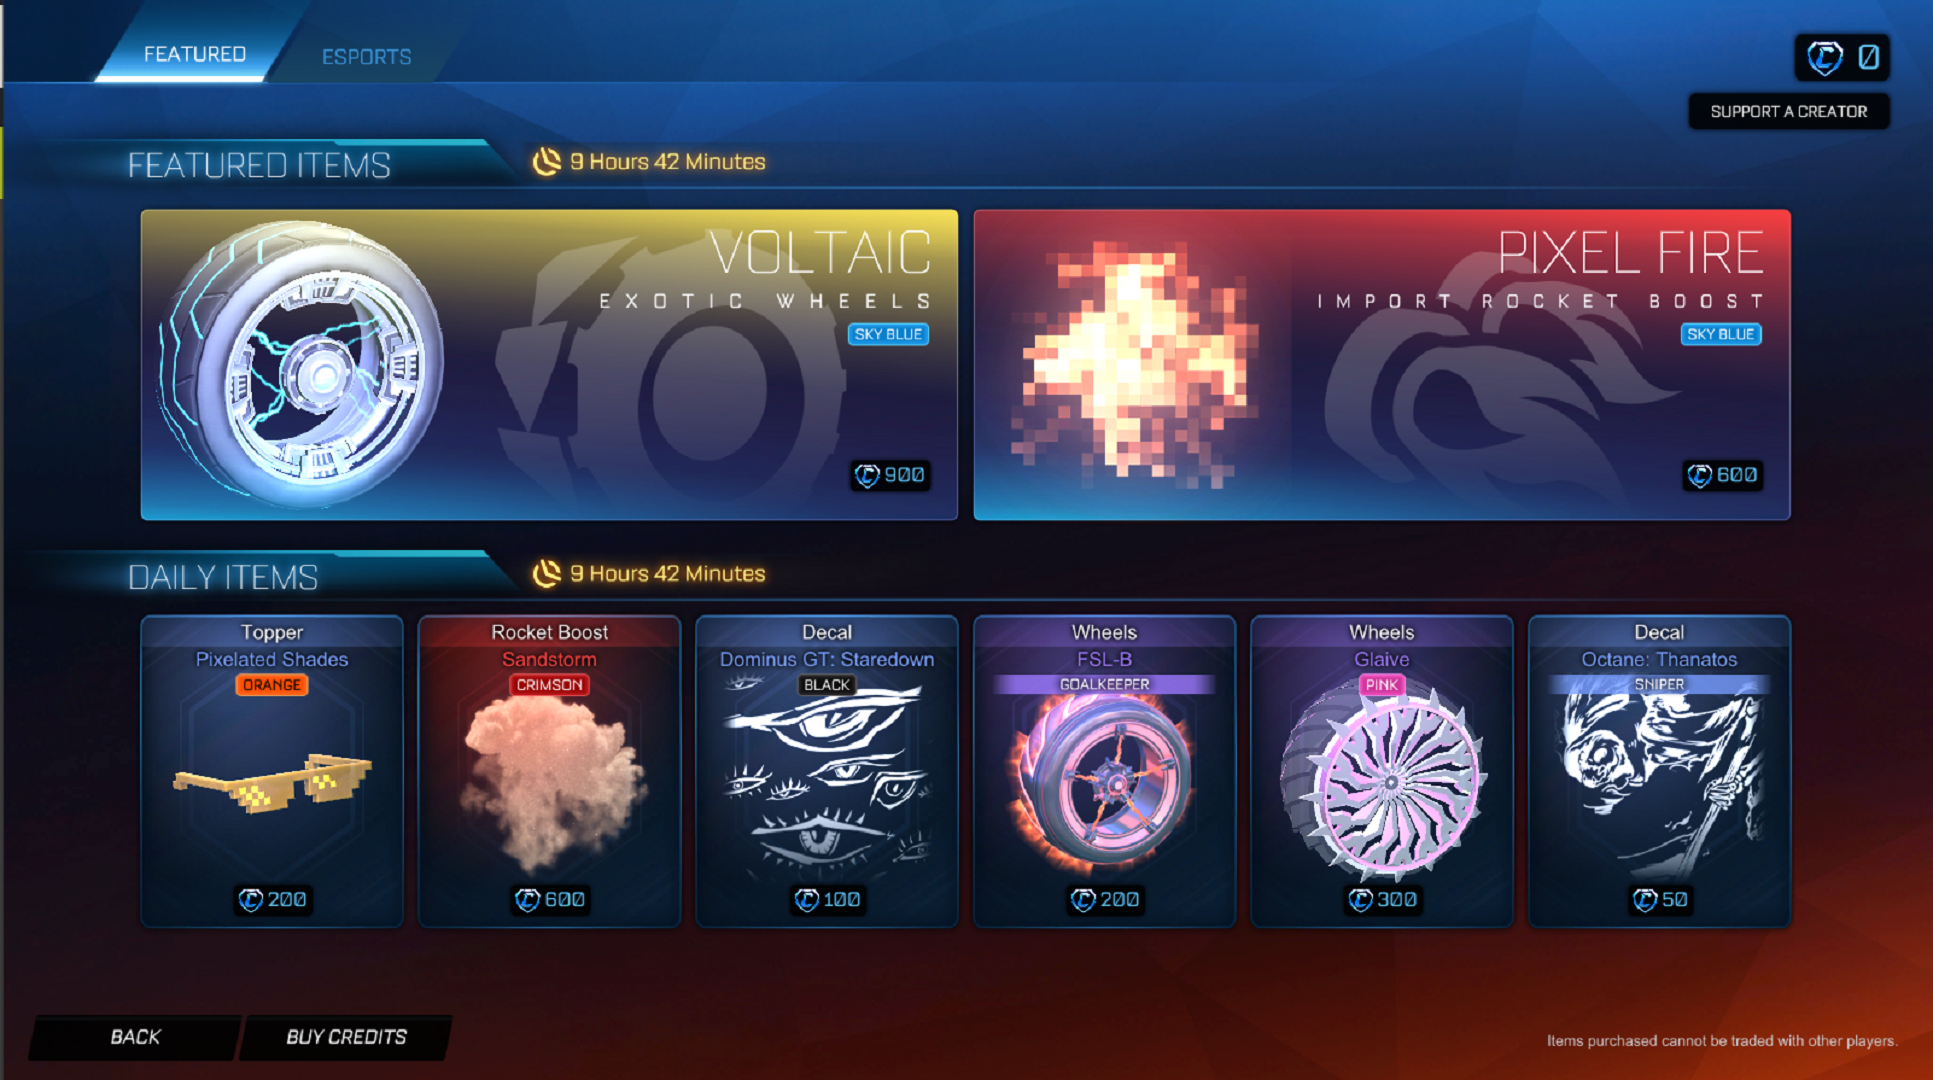 The menu screen of the Rocket League item shop